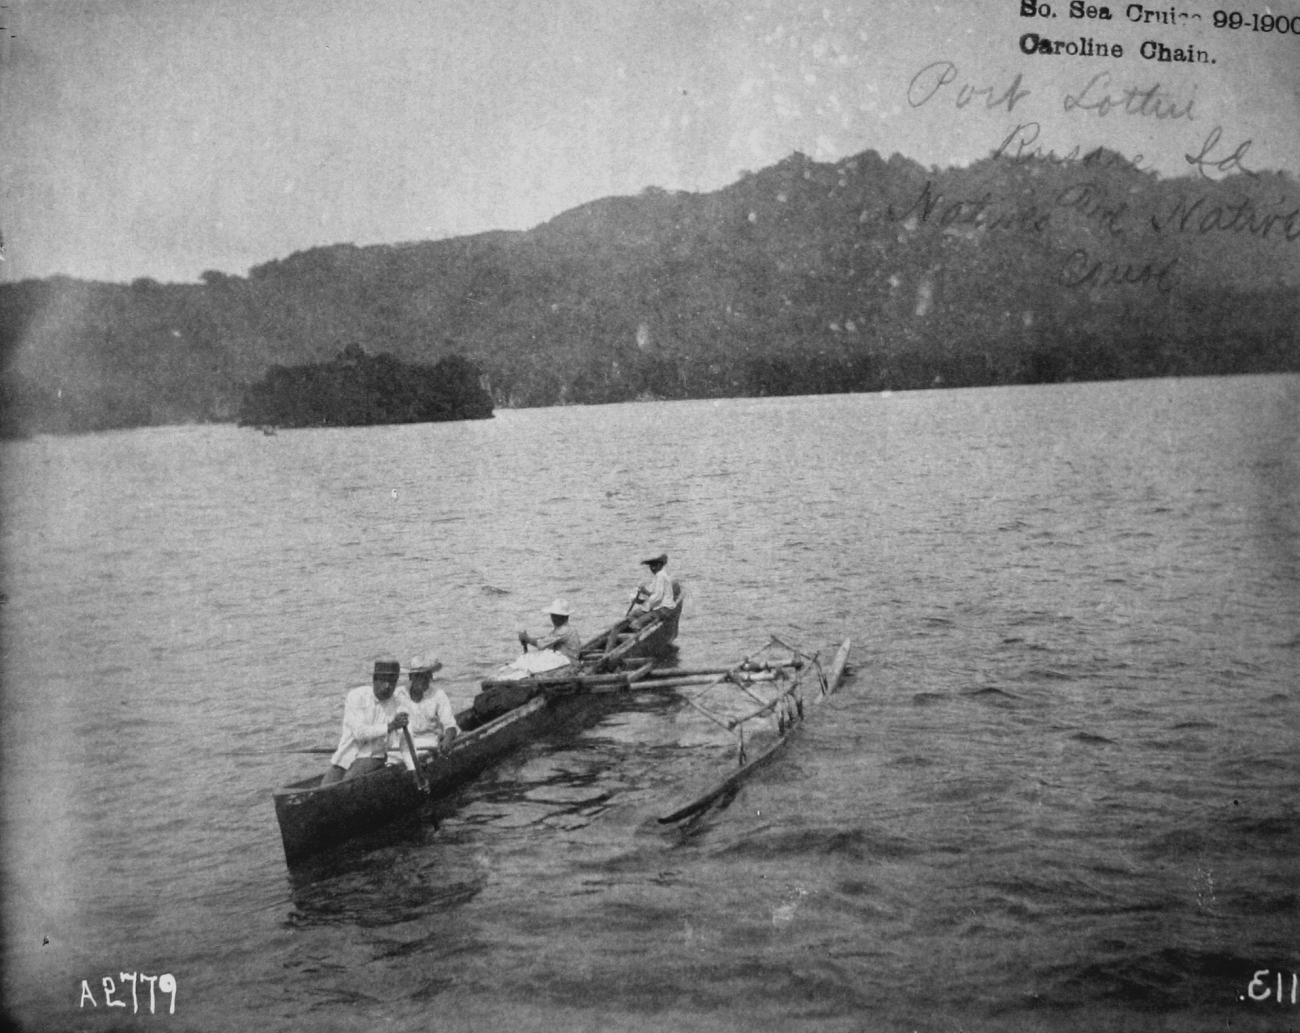 South Sea cruise 99-1900, Caroline Chain, Port Lottin, Kusaie Island,natives and native canoe